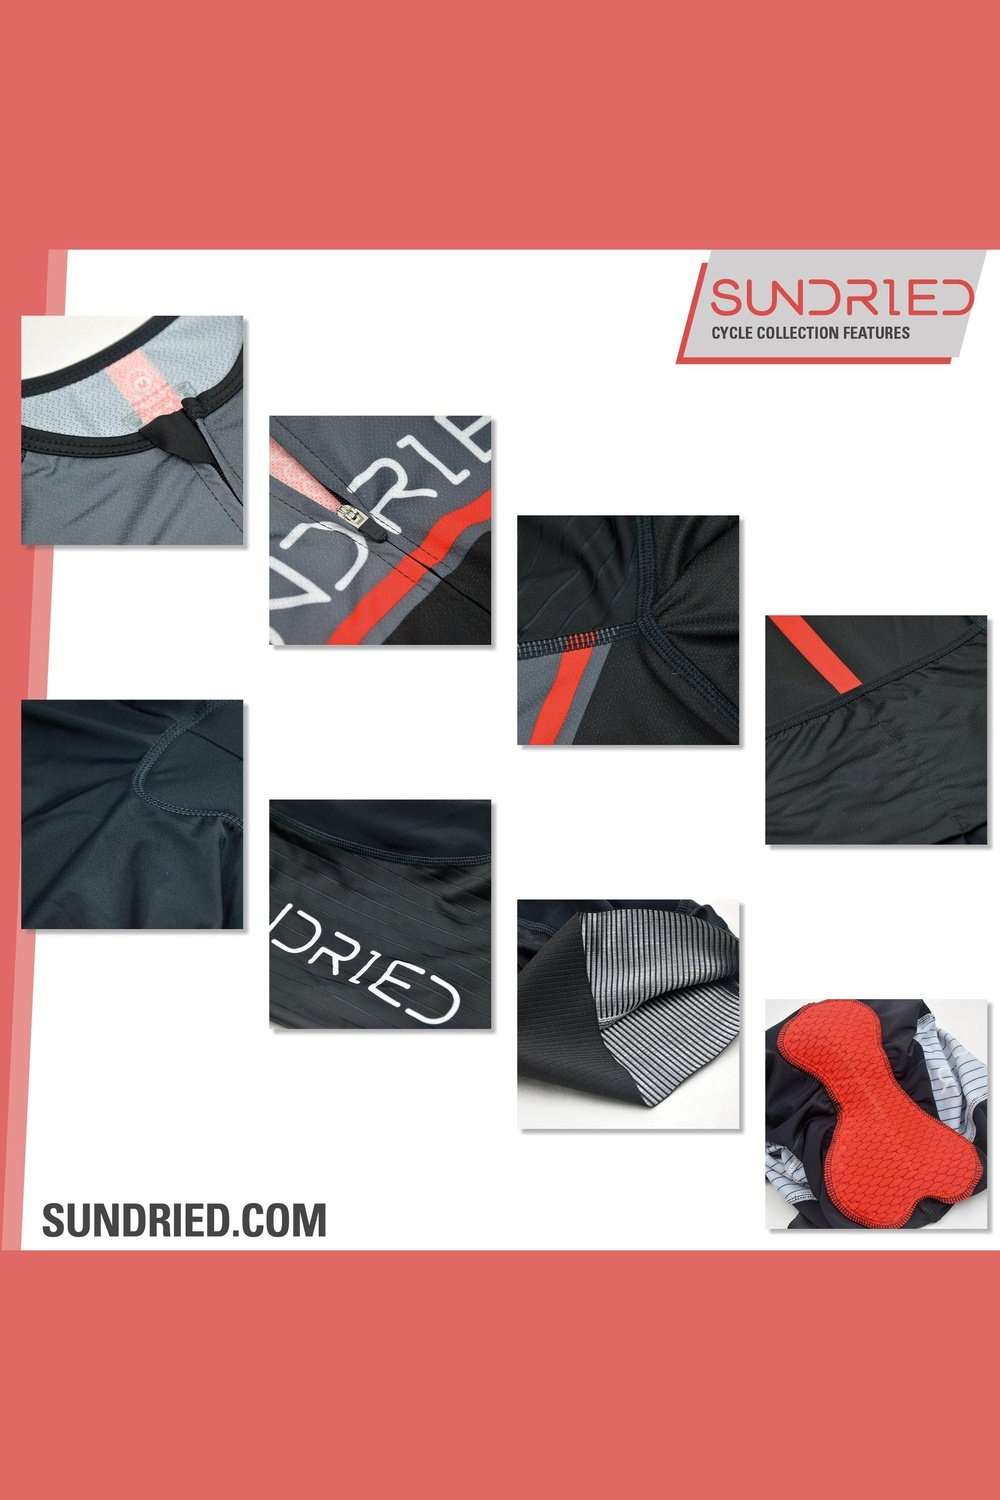 Sundried Cadence Men's Aero Skinsuit Trisuit Activewear